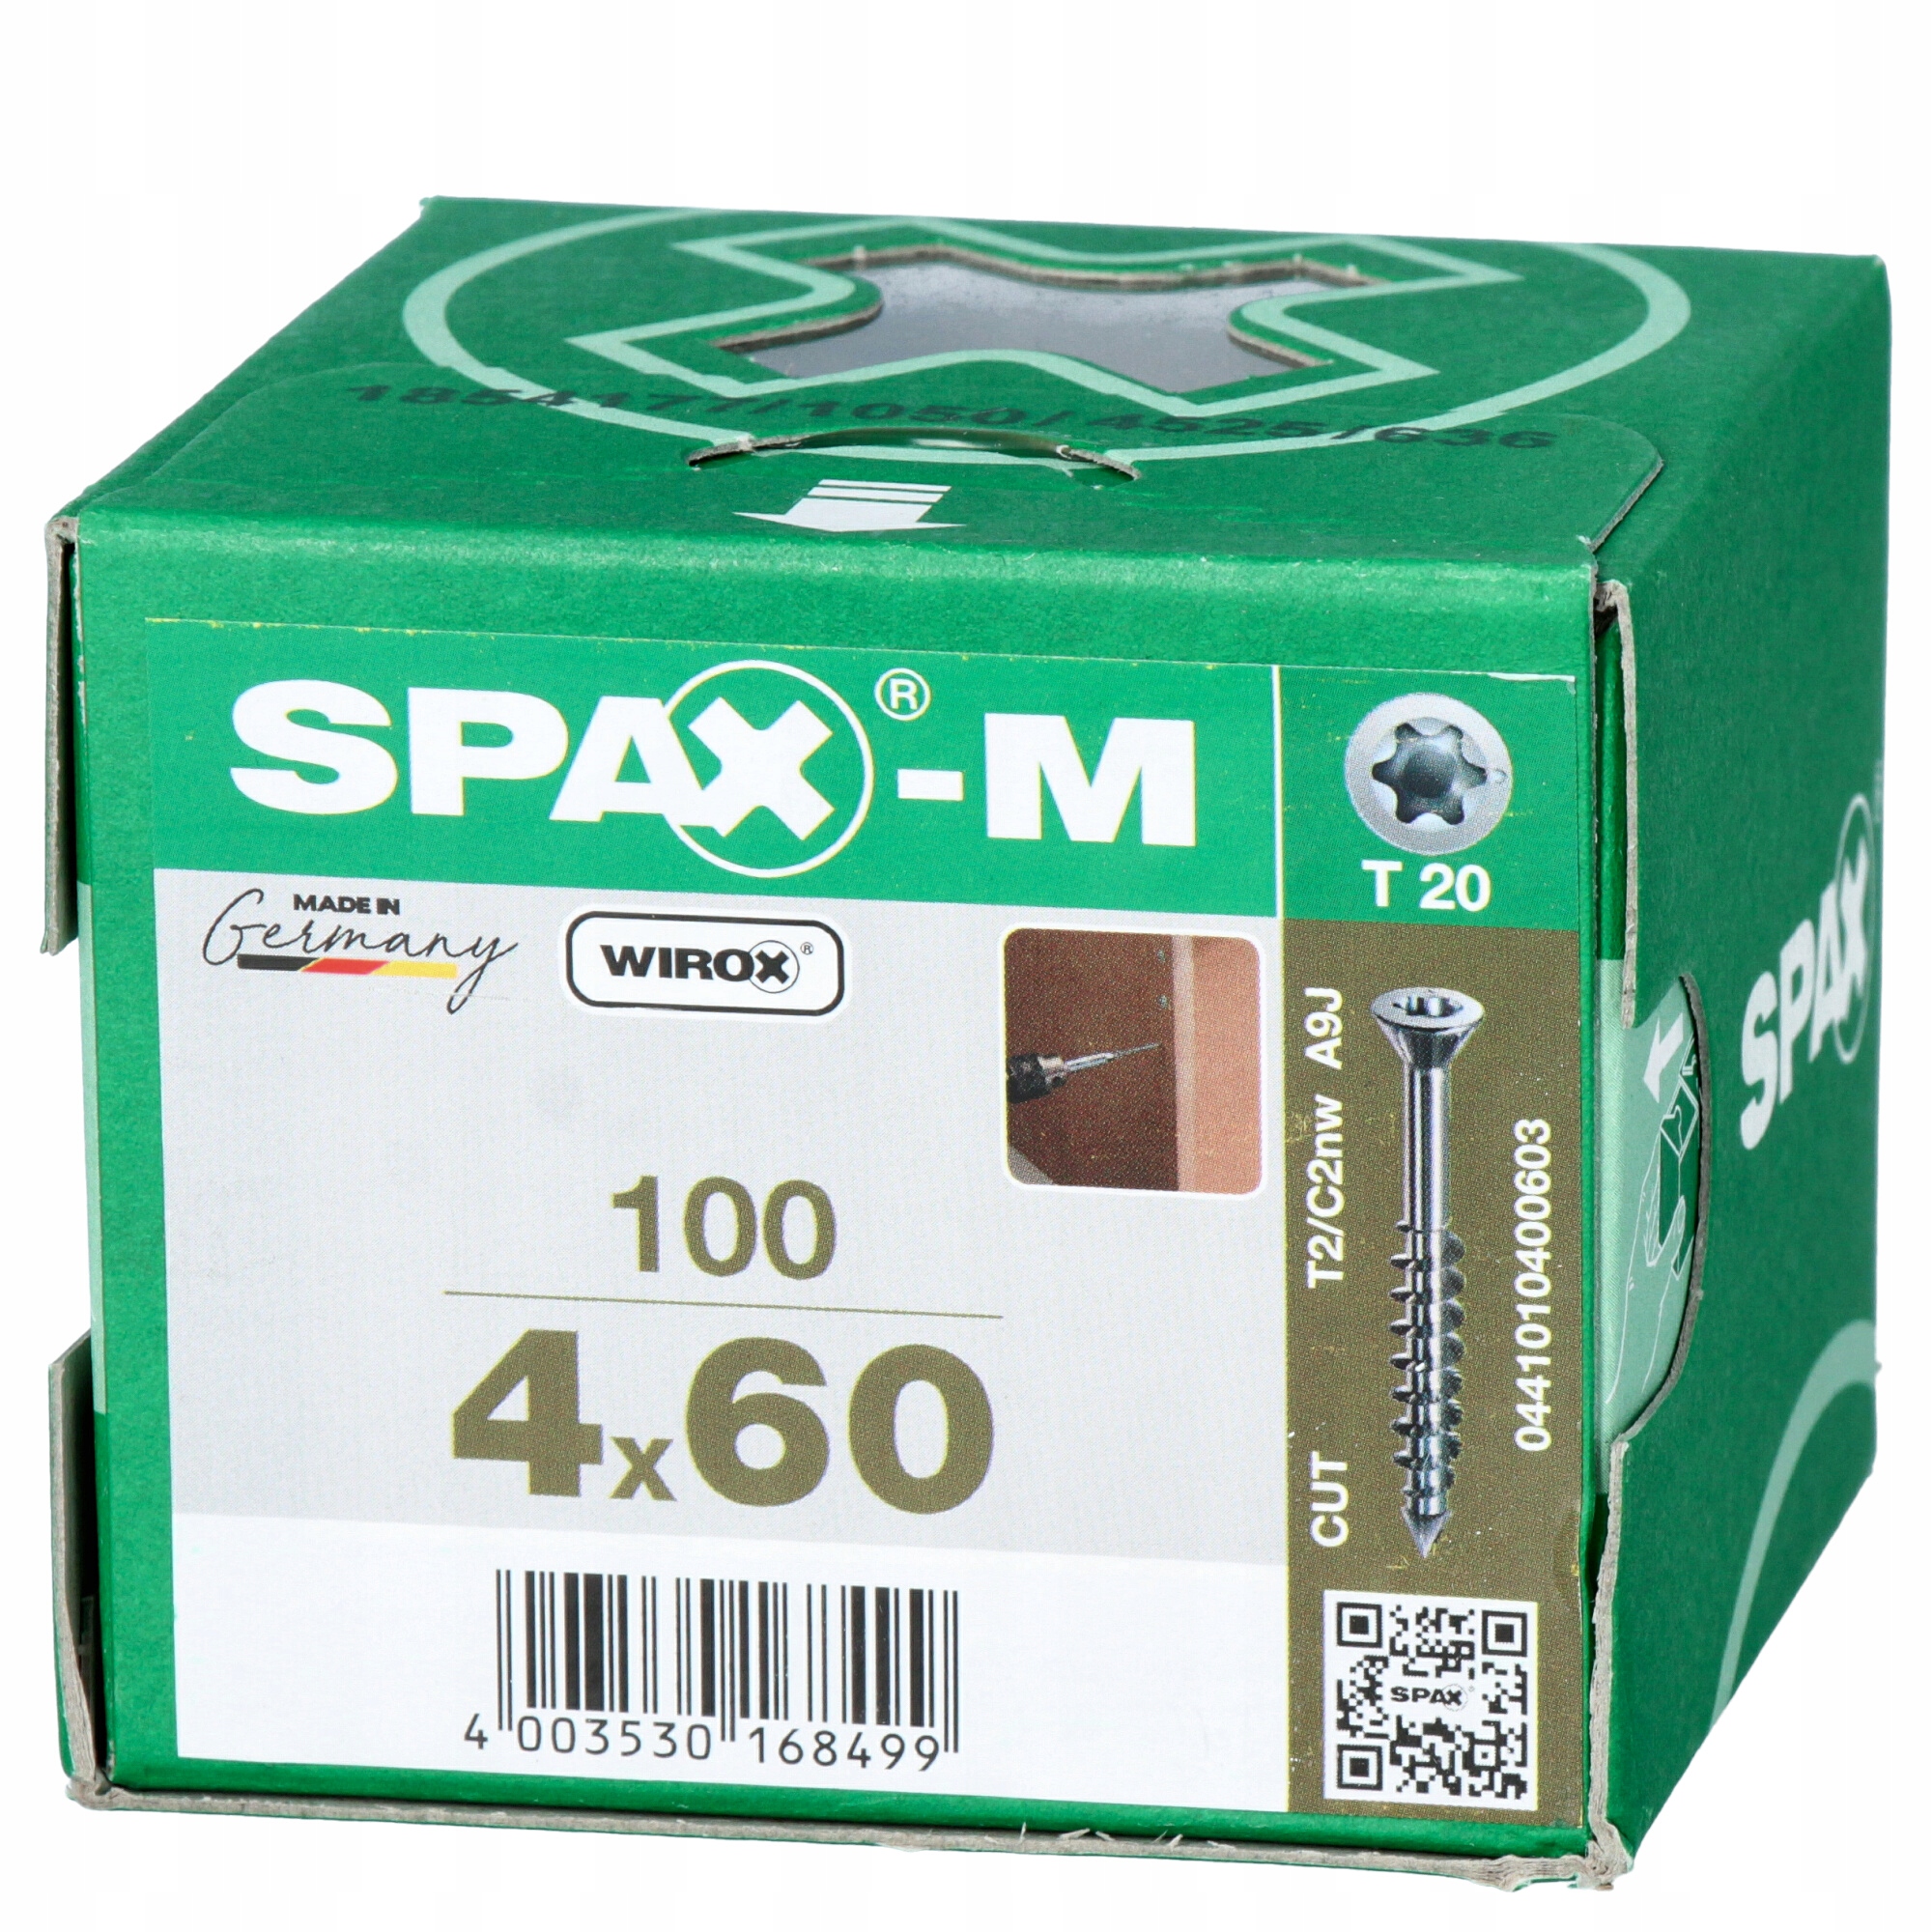 Wkręty do płyt MDF SPAX 4x60 meblowe 100 szt 10487017662 - Allegro.pl